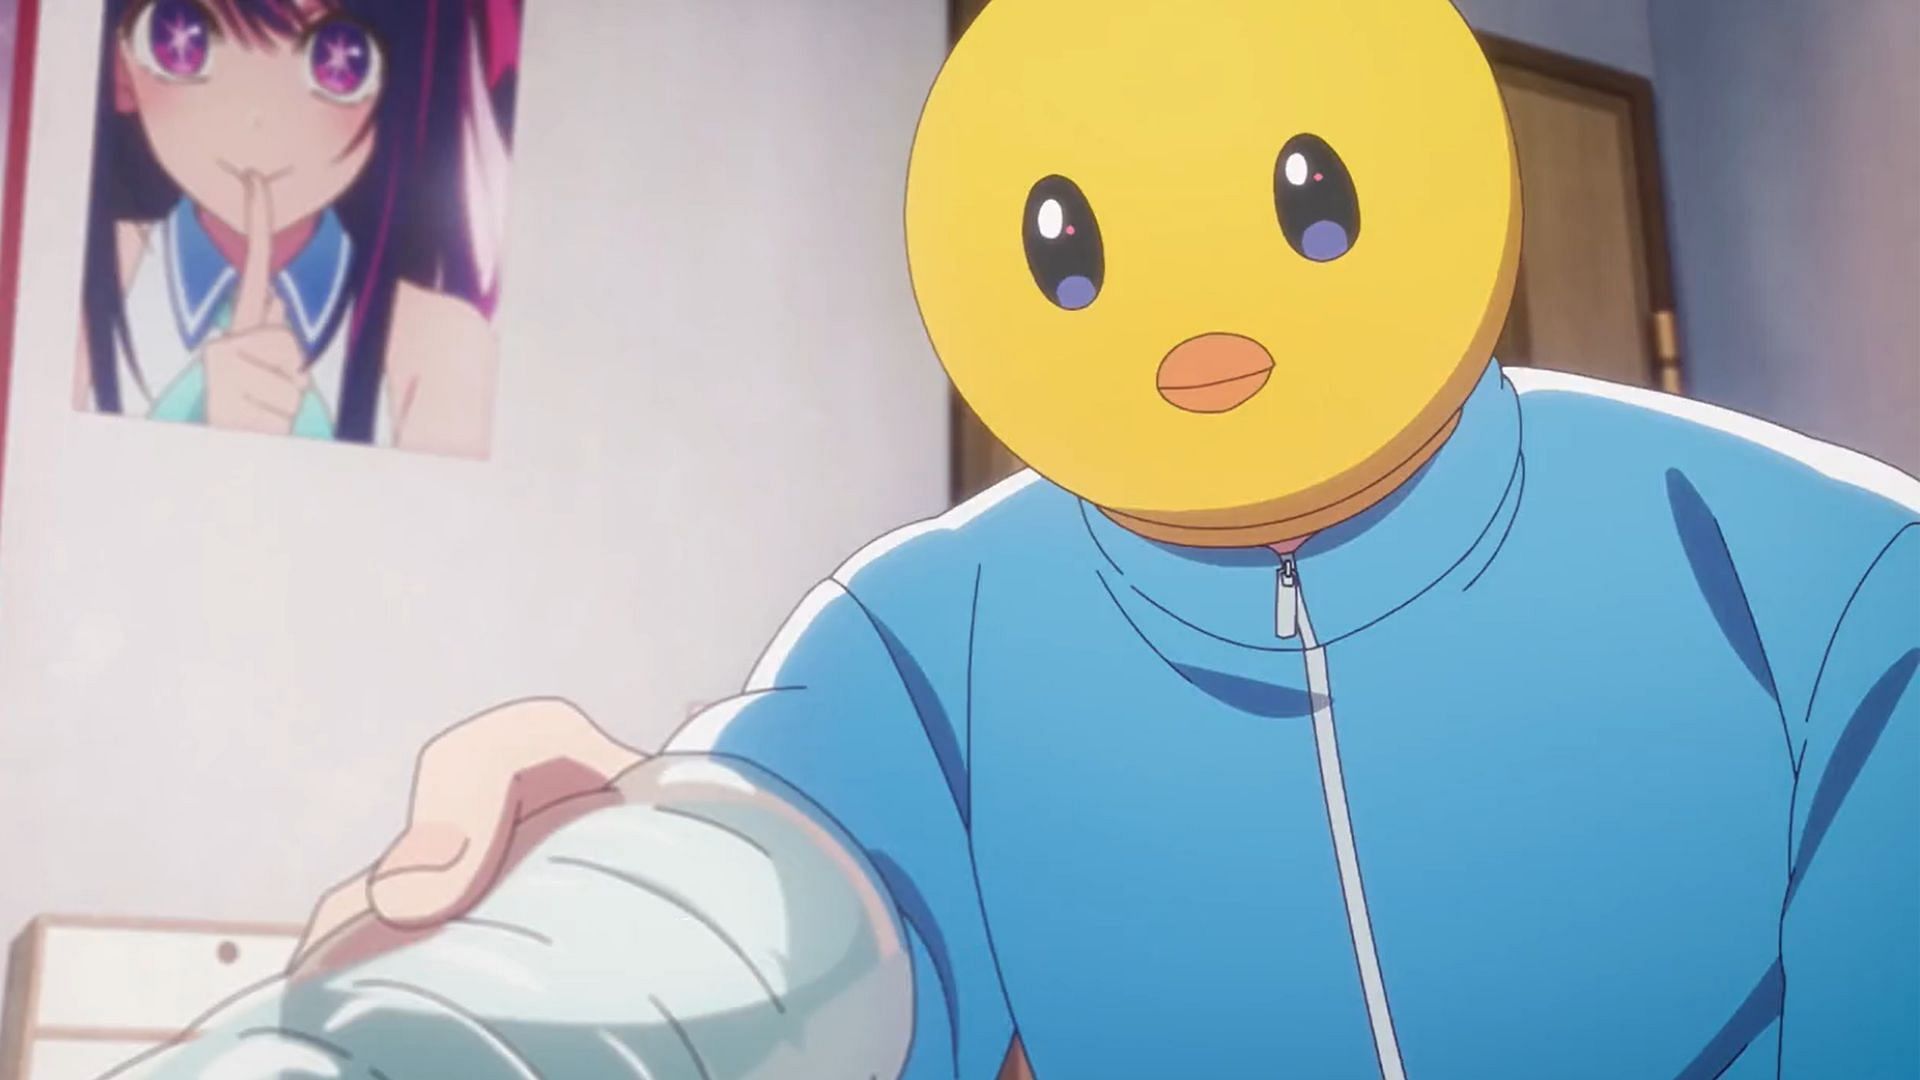 Oshi no Ko Episode 11 (Finale) Preview Released - Anime Corner